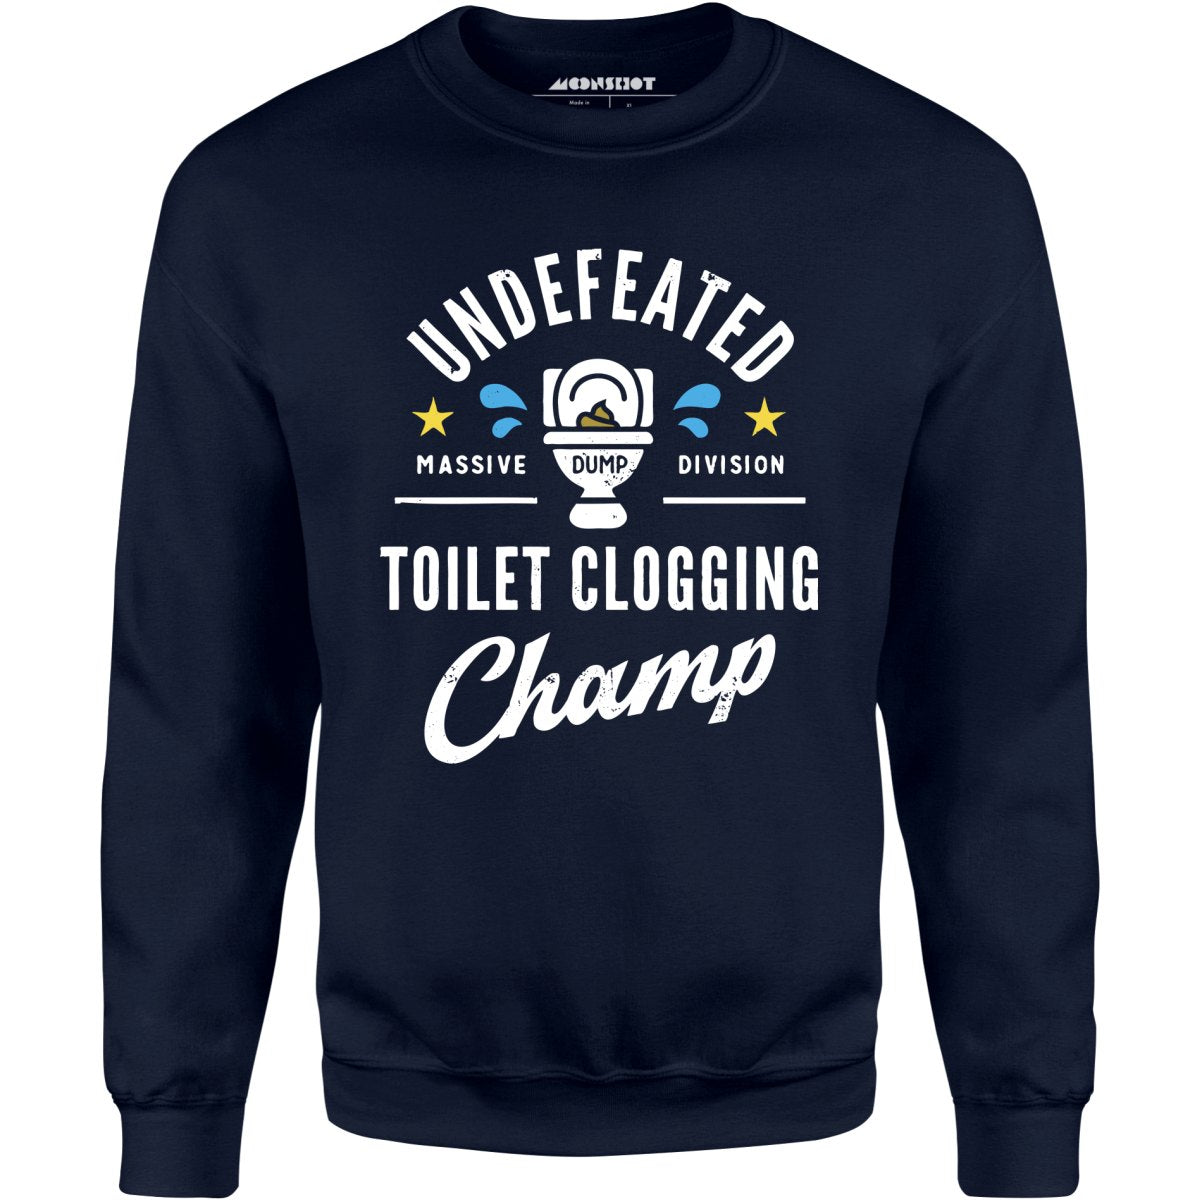 Undefeated Toilet Clogging Champ - Unisex Sweatshirt